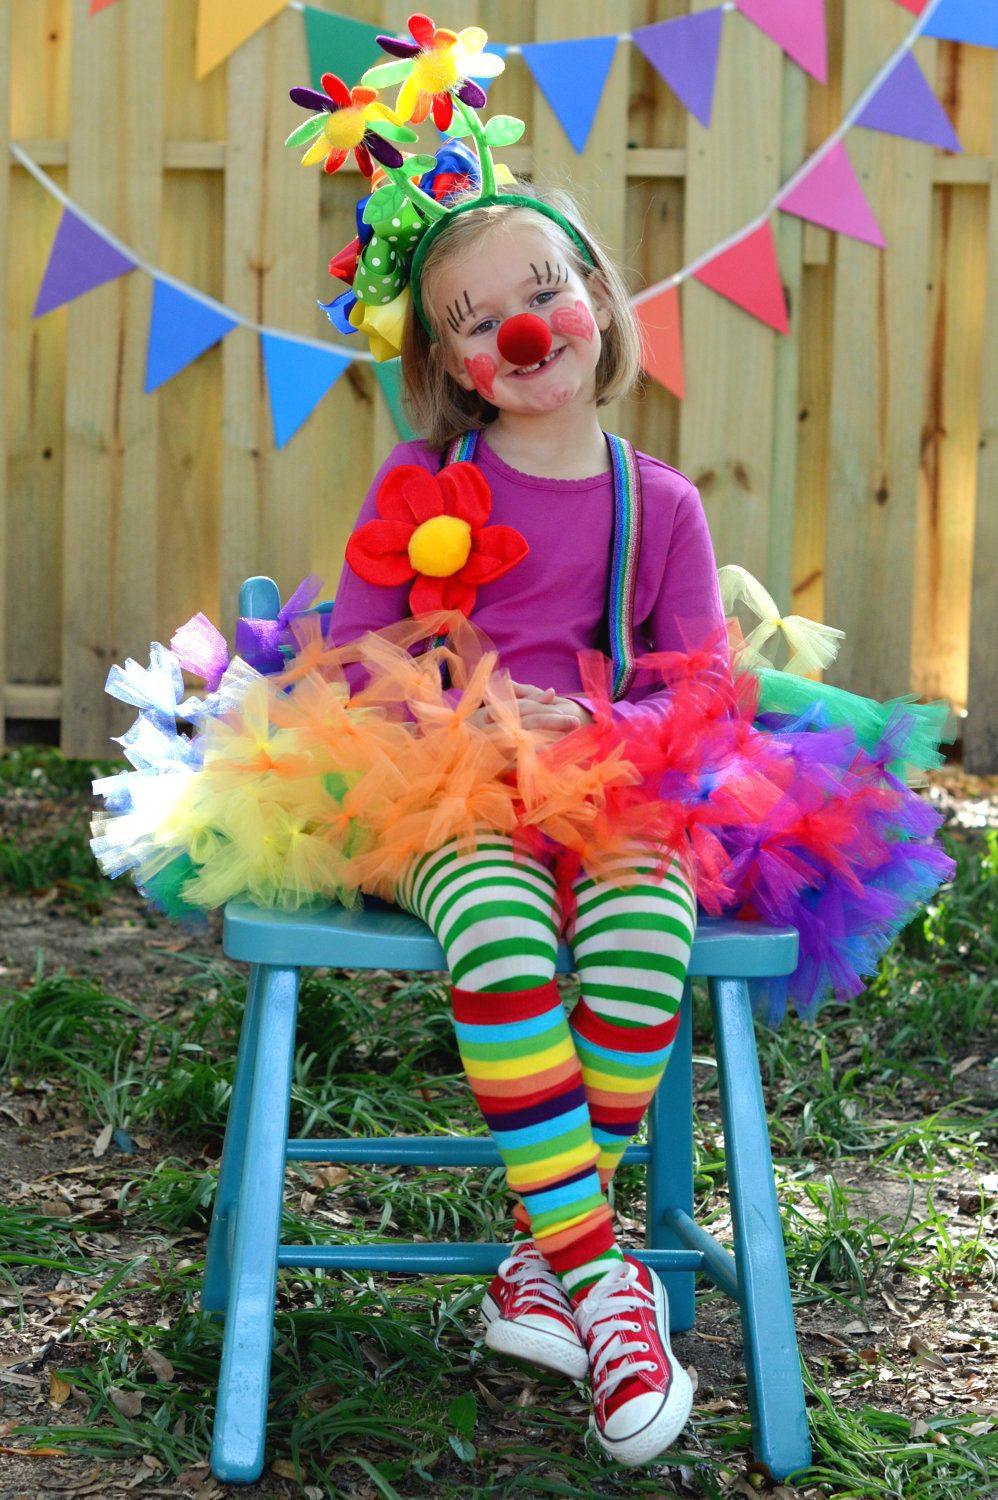 DIY Circus Costumes
 Atutudes Circus Clown Rainbow Pettitutu by atutudes on